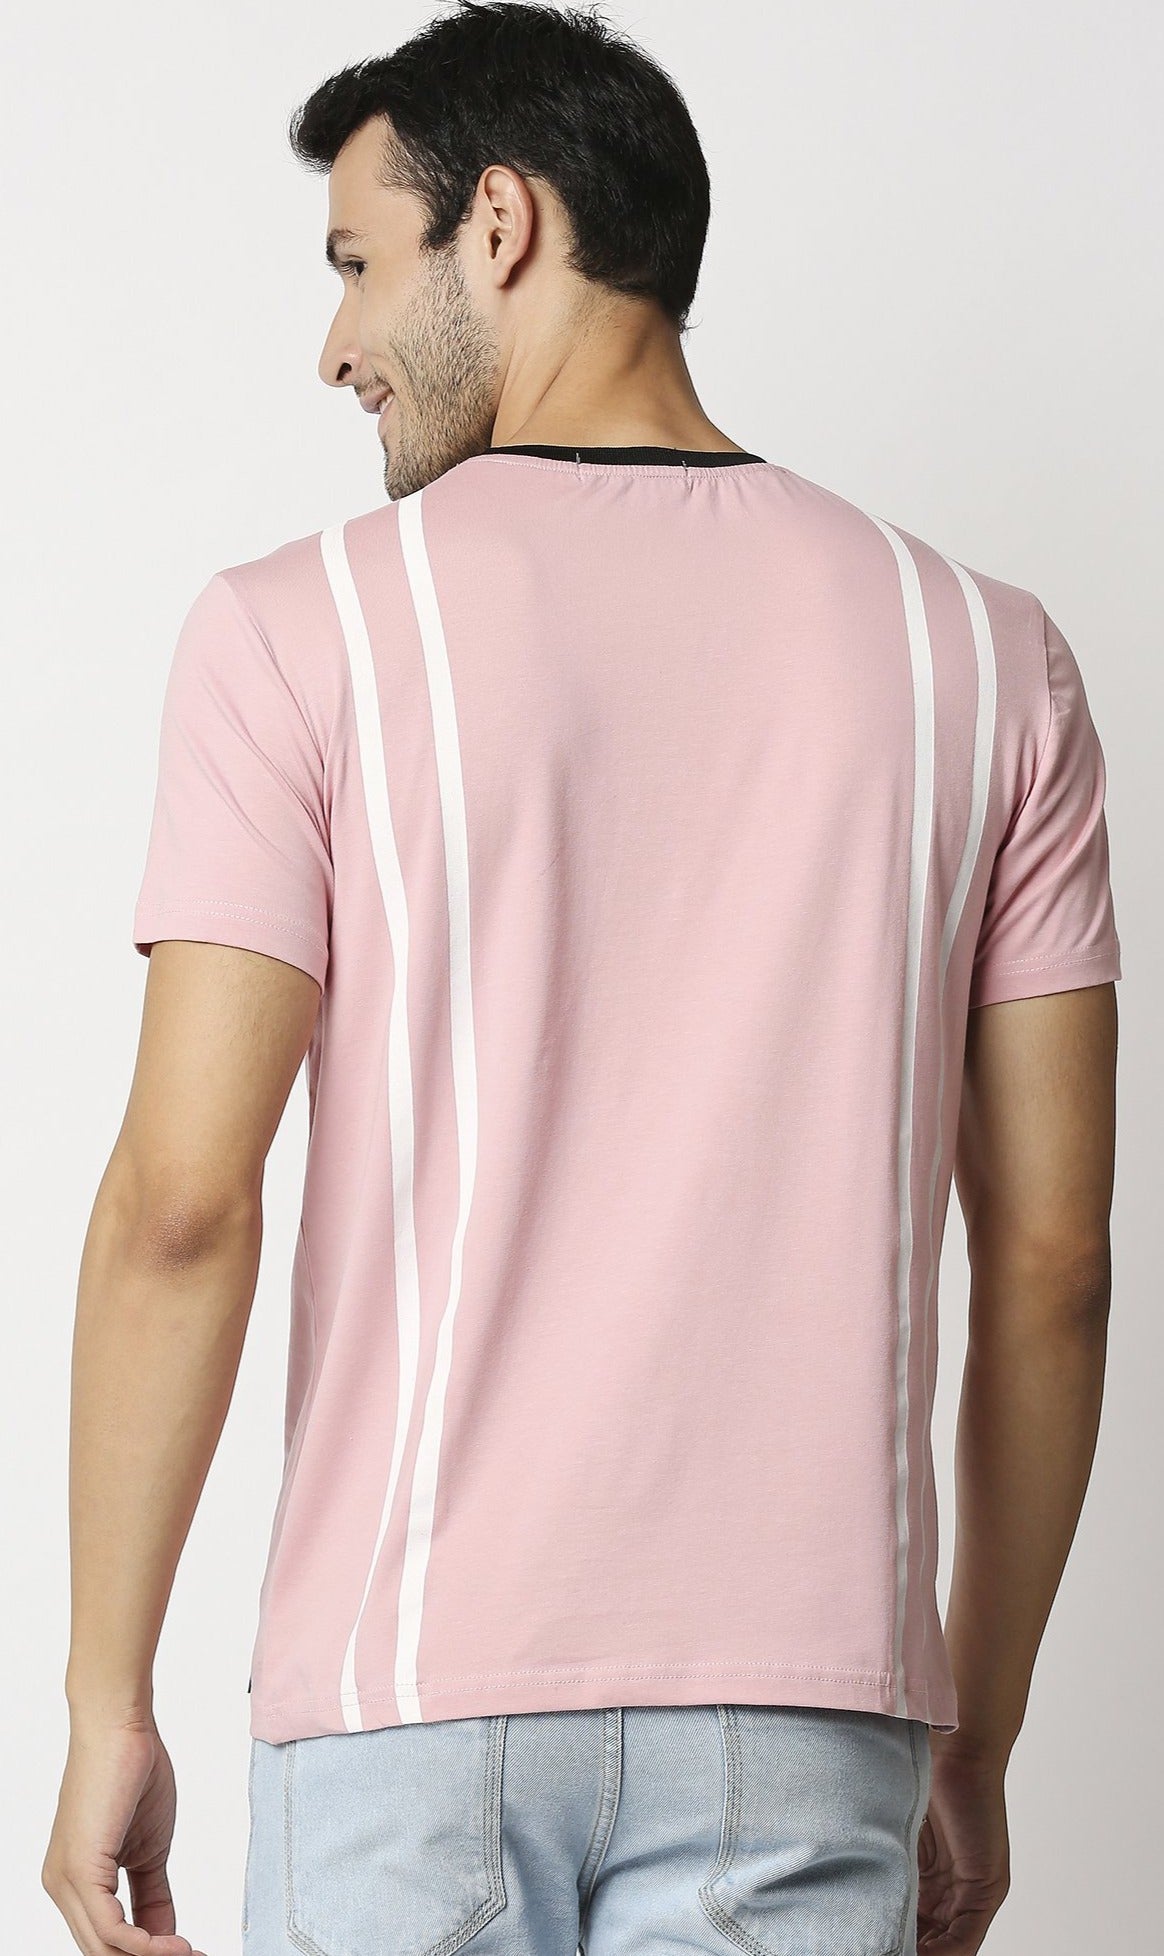 Fostino Suspender Pink Round Neck T-Shirt - Fostino - T-Shirts